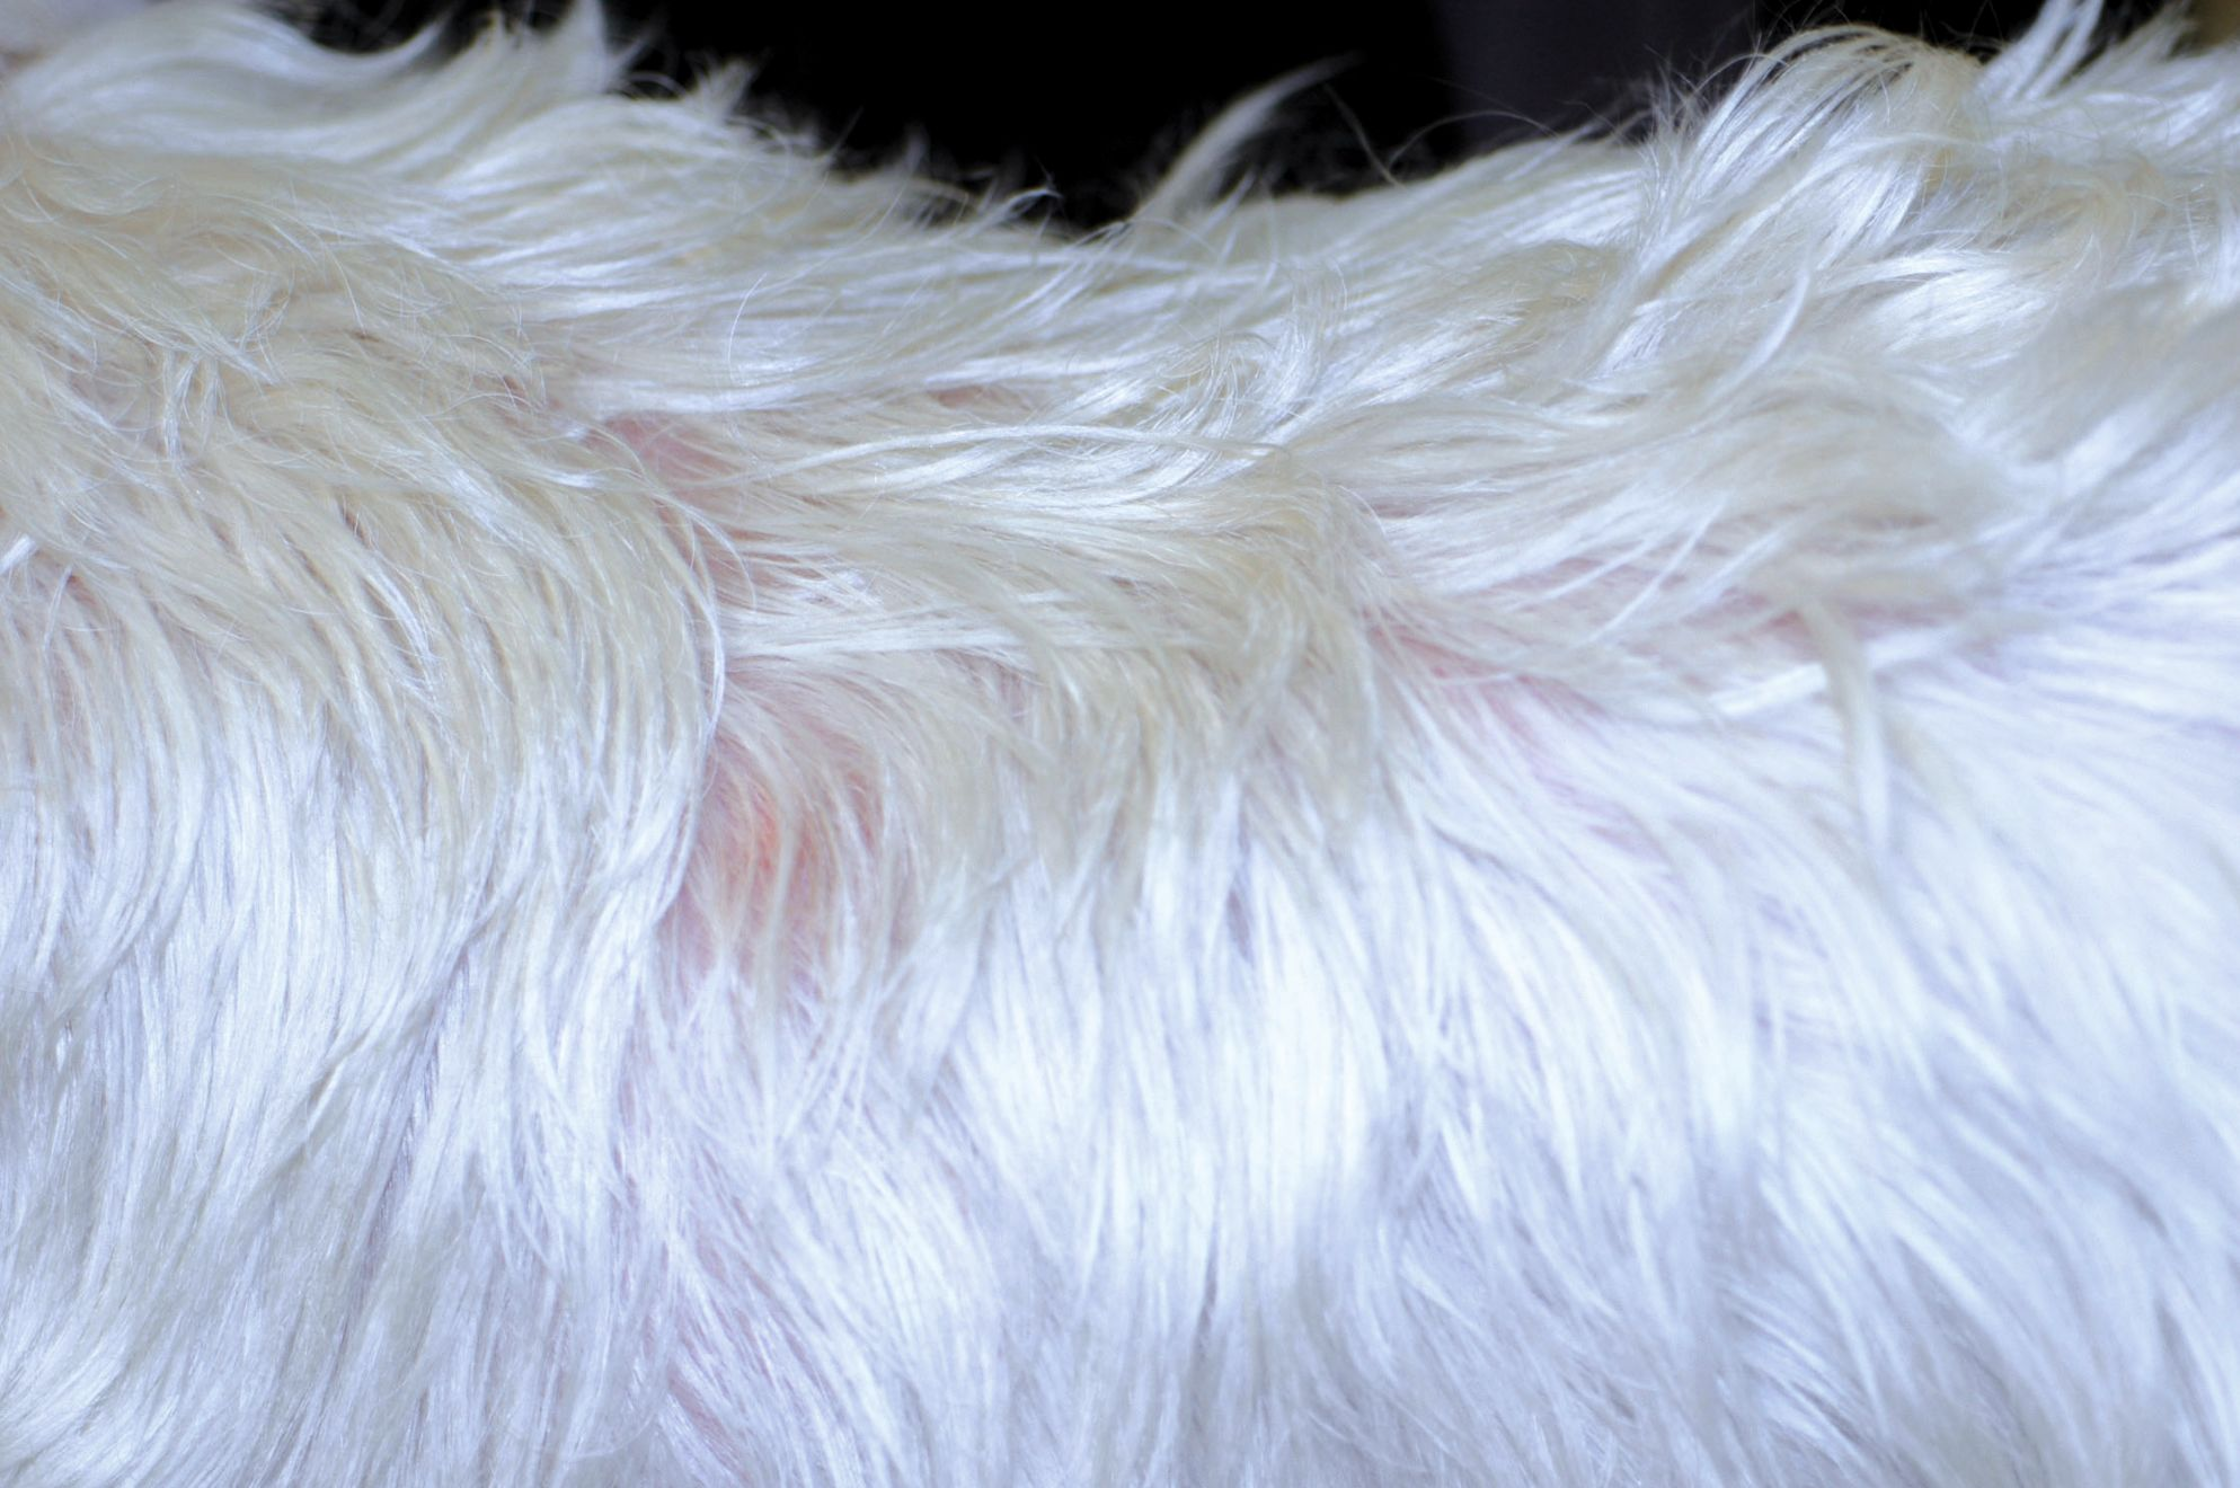 Demodex injai si presenta spesso nei Terrier di mezza età come una condizione cutanea.